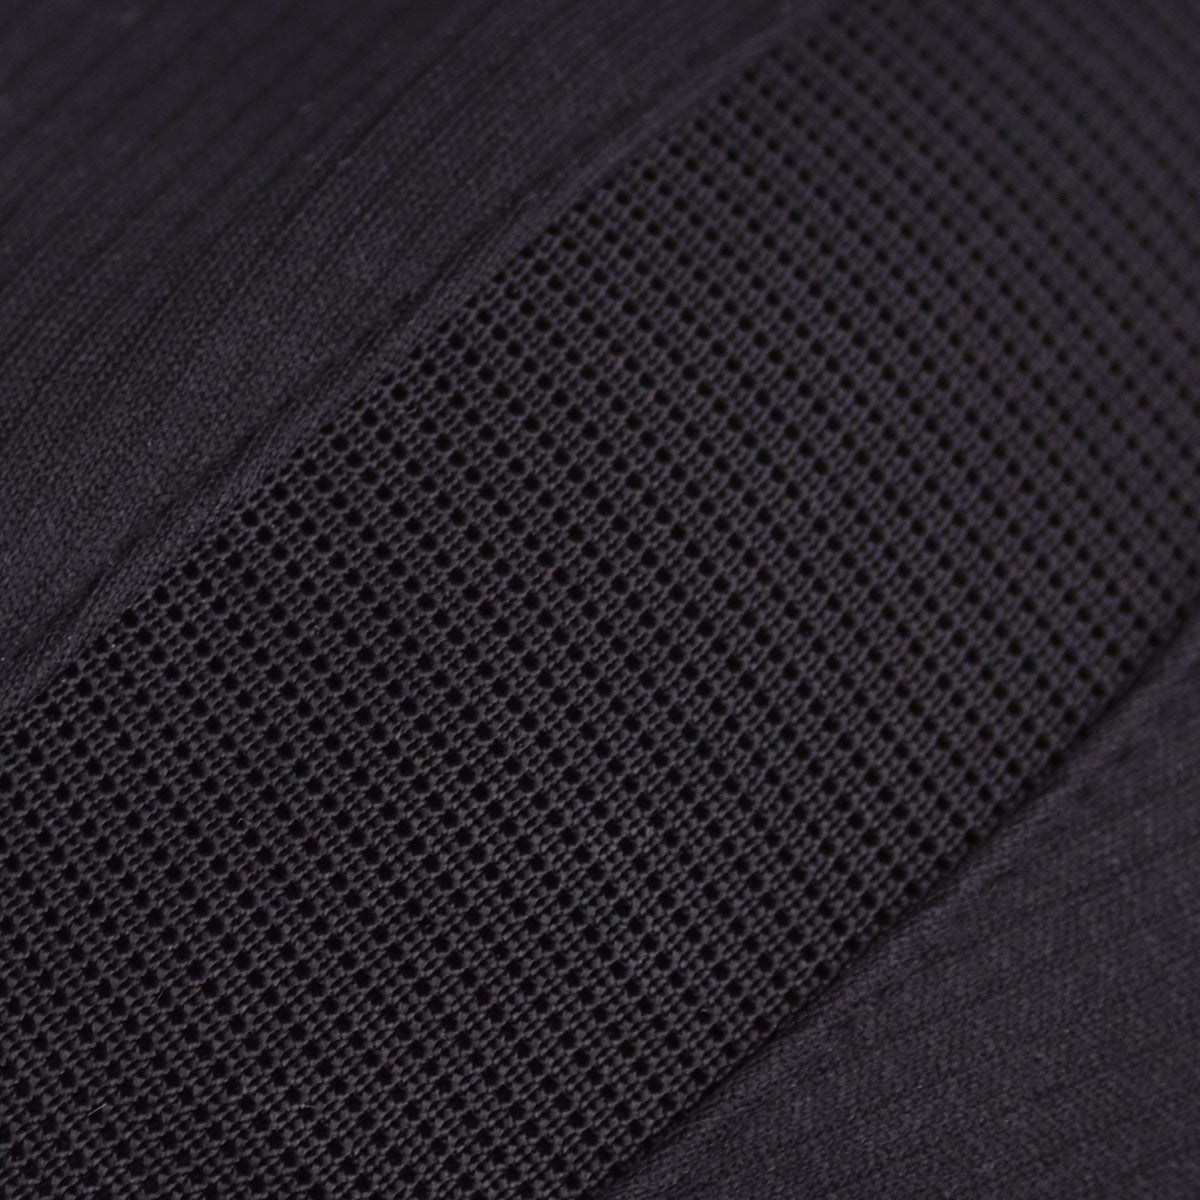 China Best quality 4 Way Stretch Mesh Fabric - 88% Nylon 12